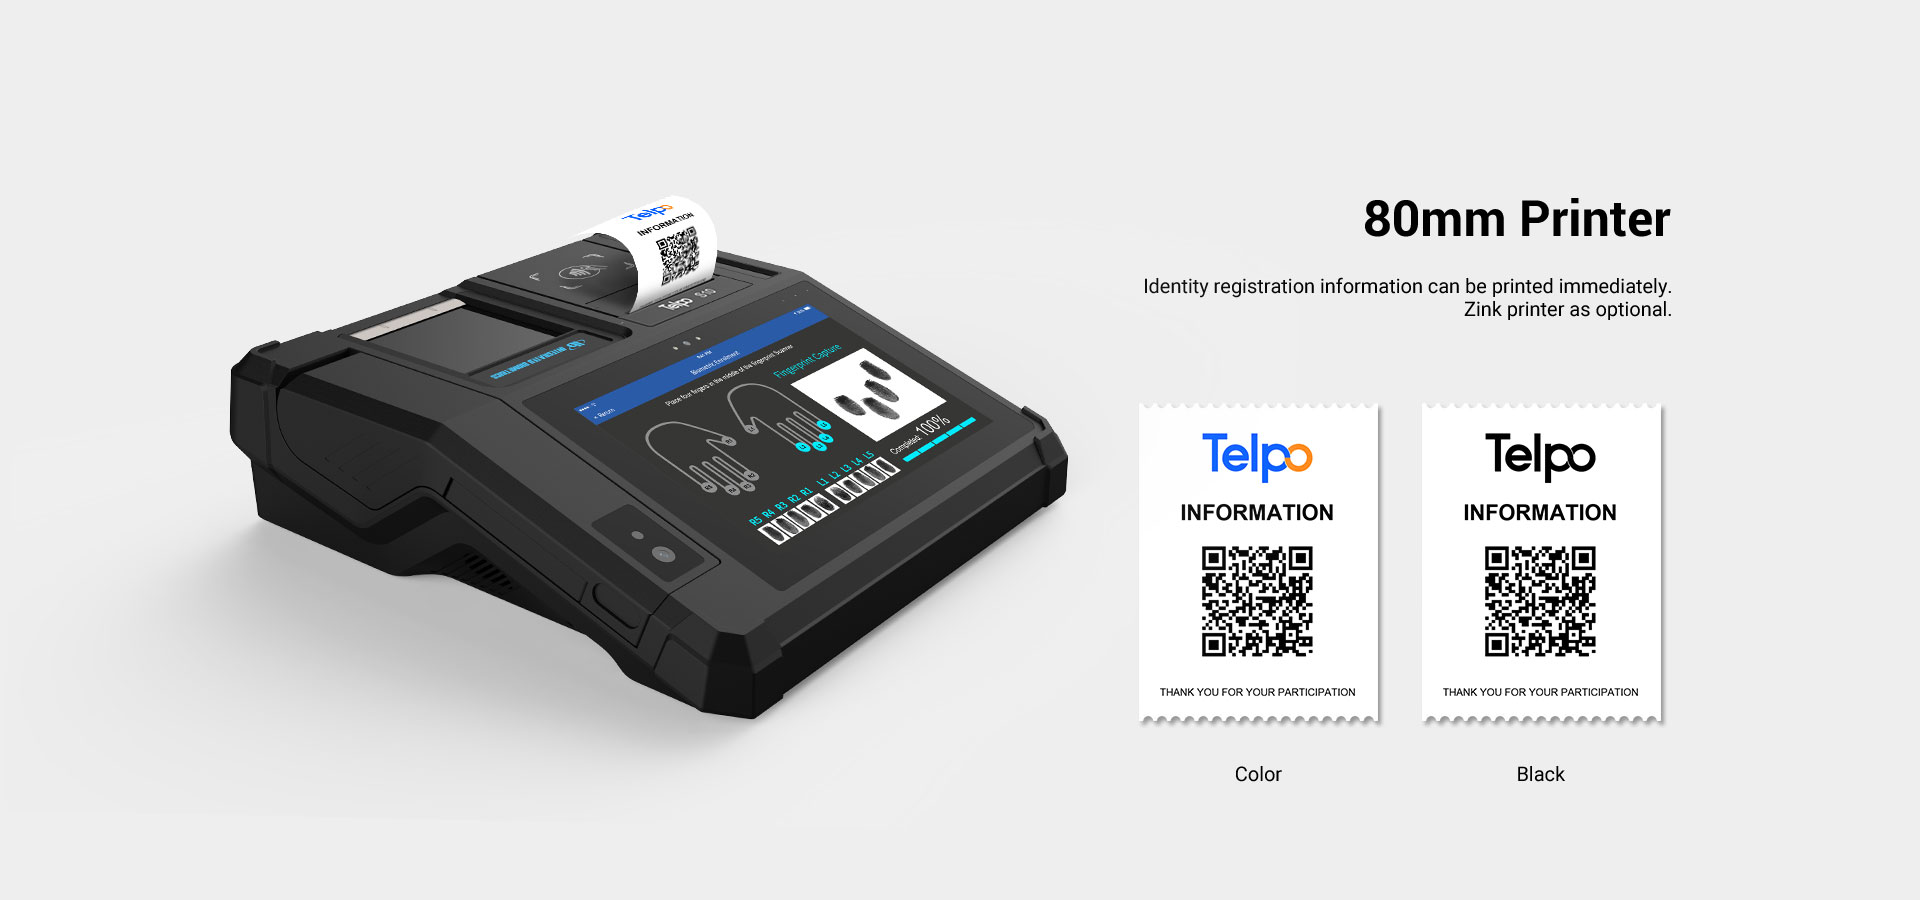 80mm Identity registration information printer biometric scanner Zink printer as optional. telpo S10